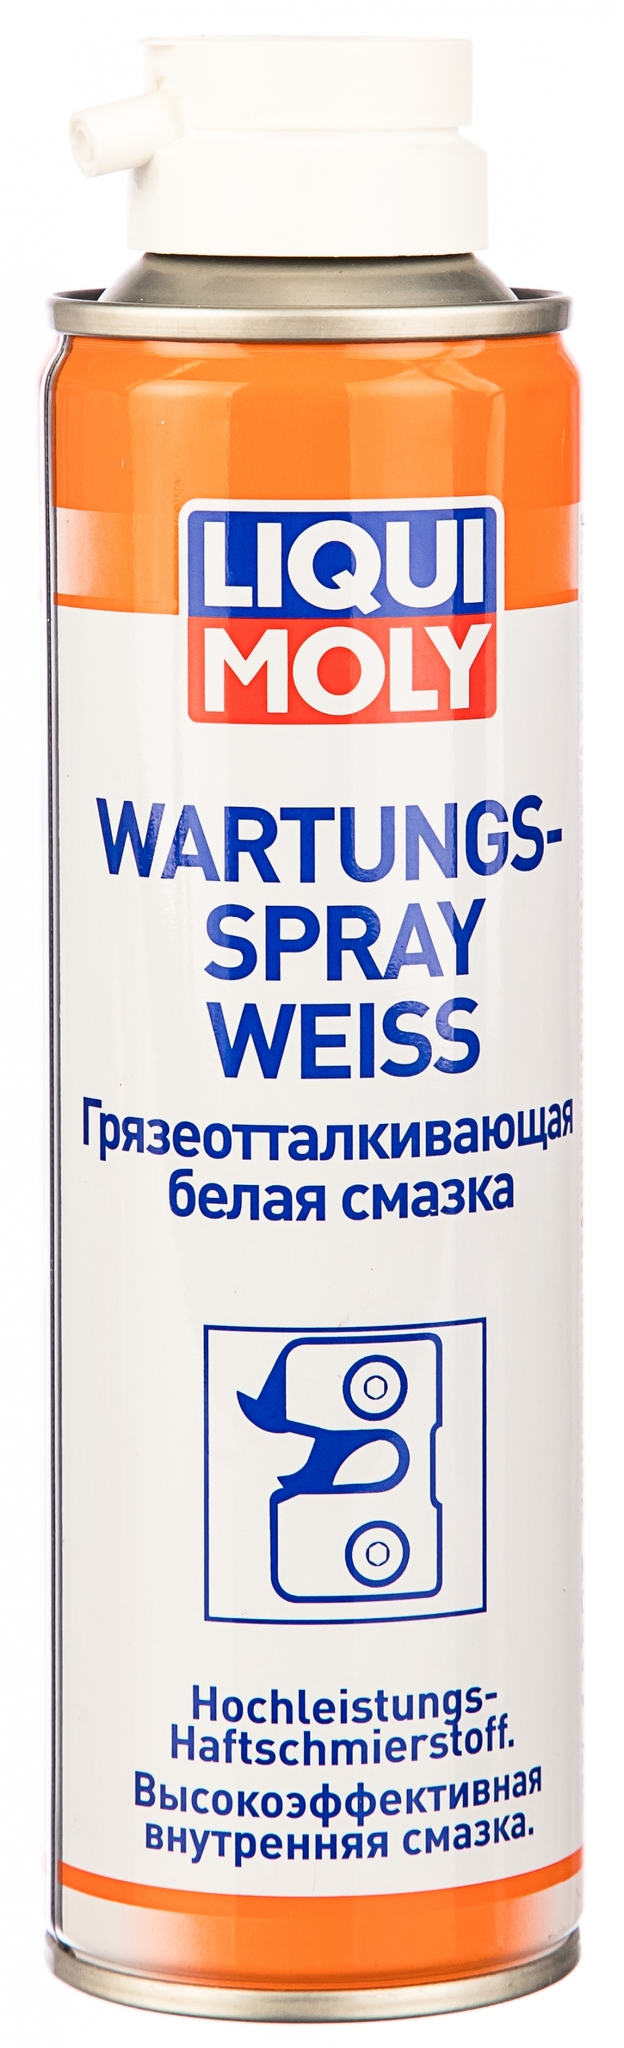 Liqui Moly Wartungs Spray Weiss Грязеотталкивающая белая смазка